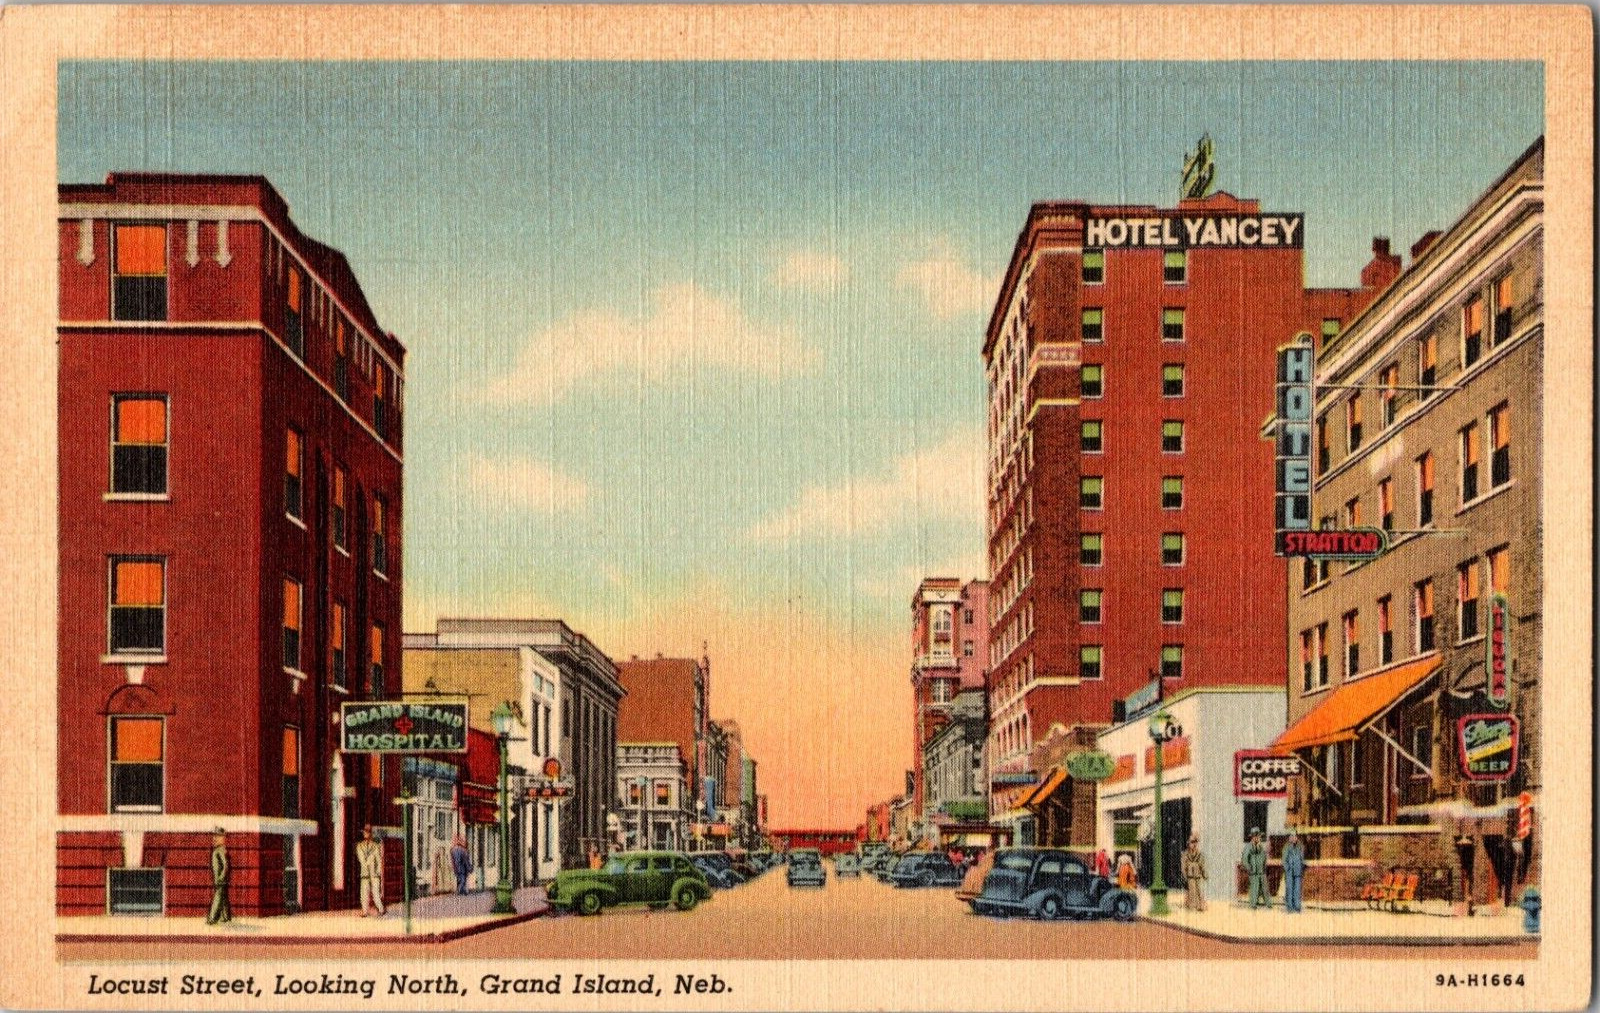 Vtg Postcard Locust Street, Looking North, Hotel Yancey, Grand Island, Neb.